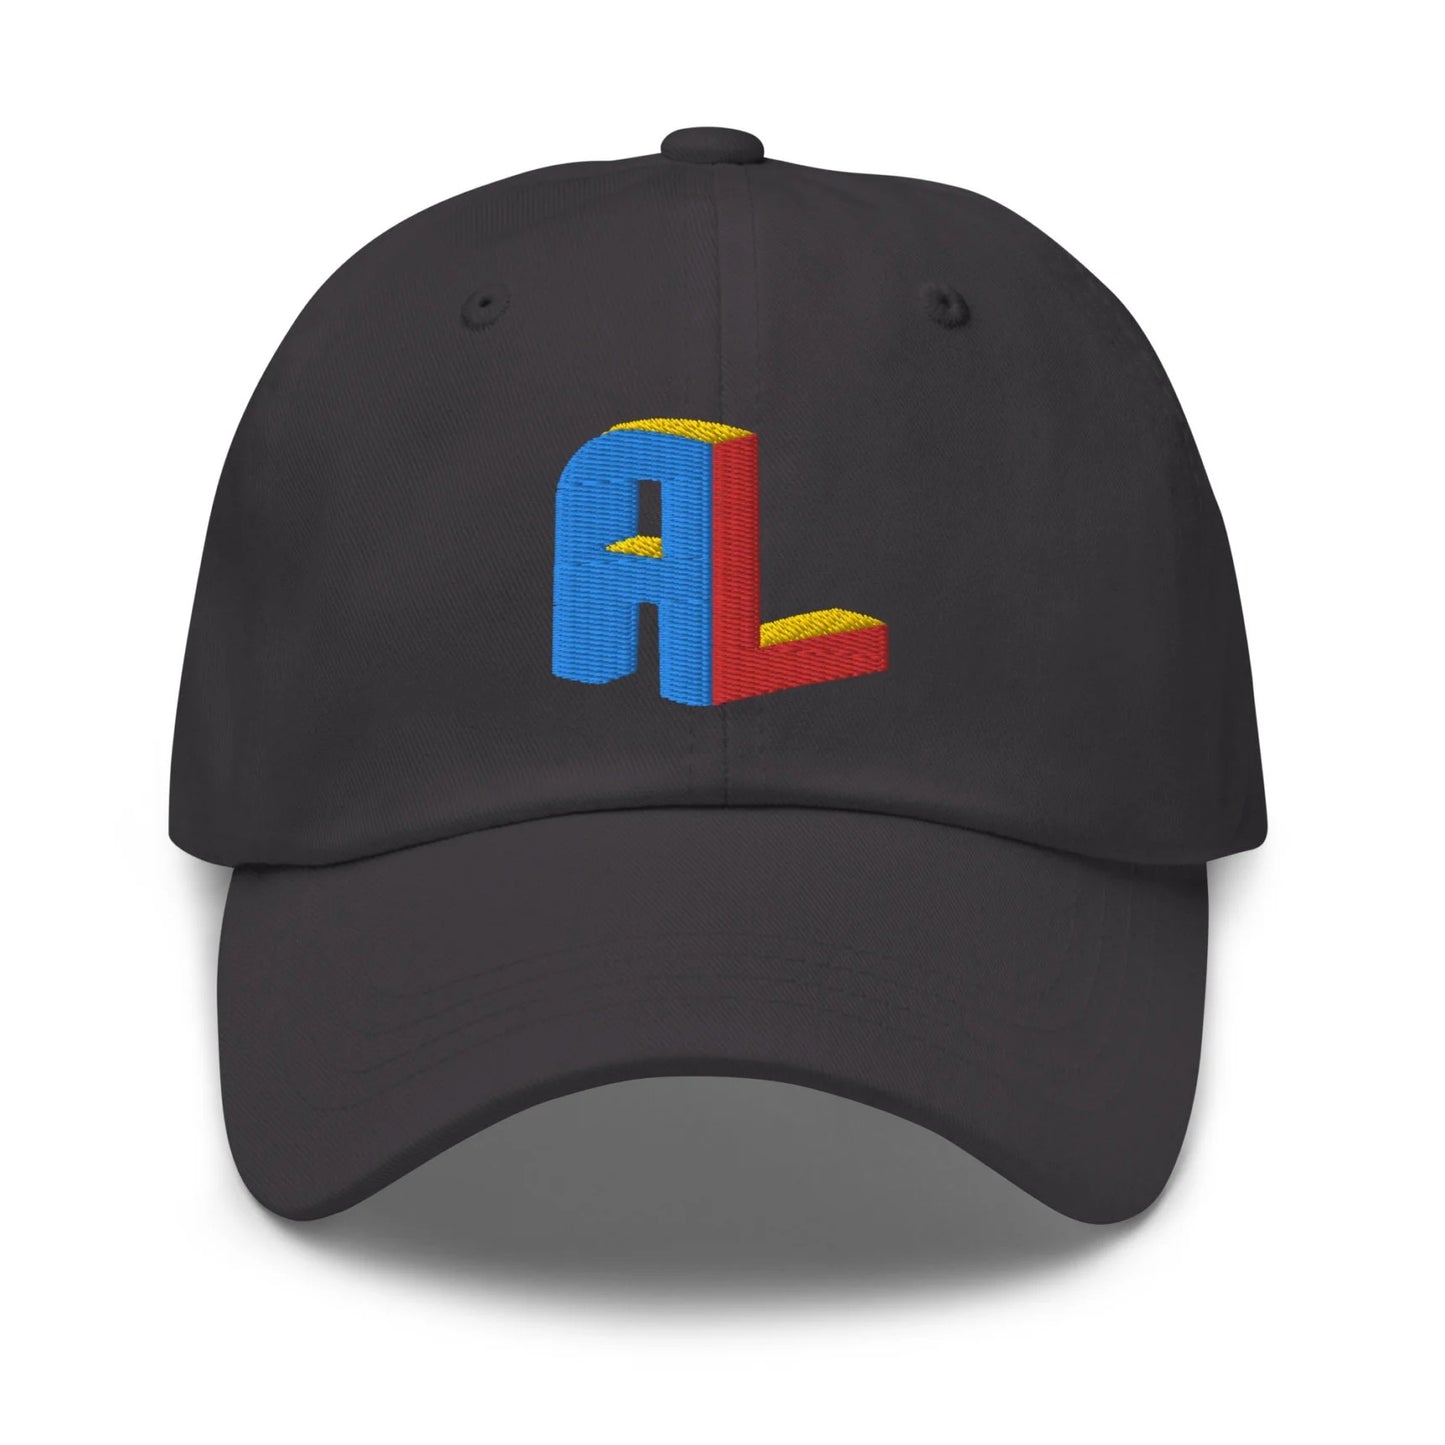 Ance Larmstrong ShowZone baseball dad hat in dark grey